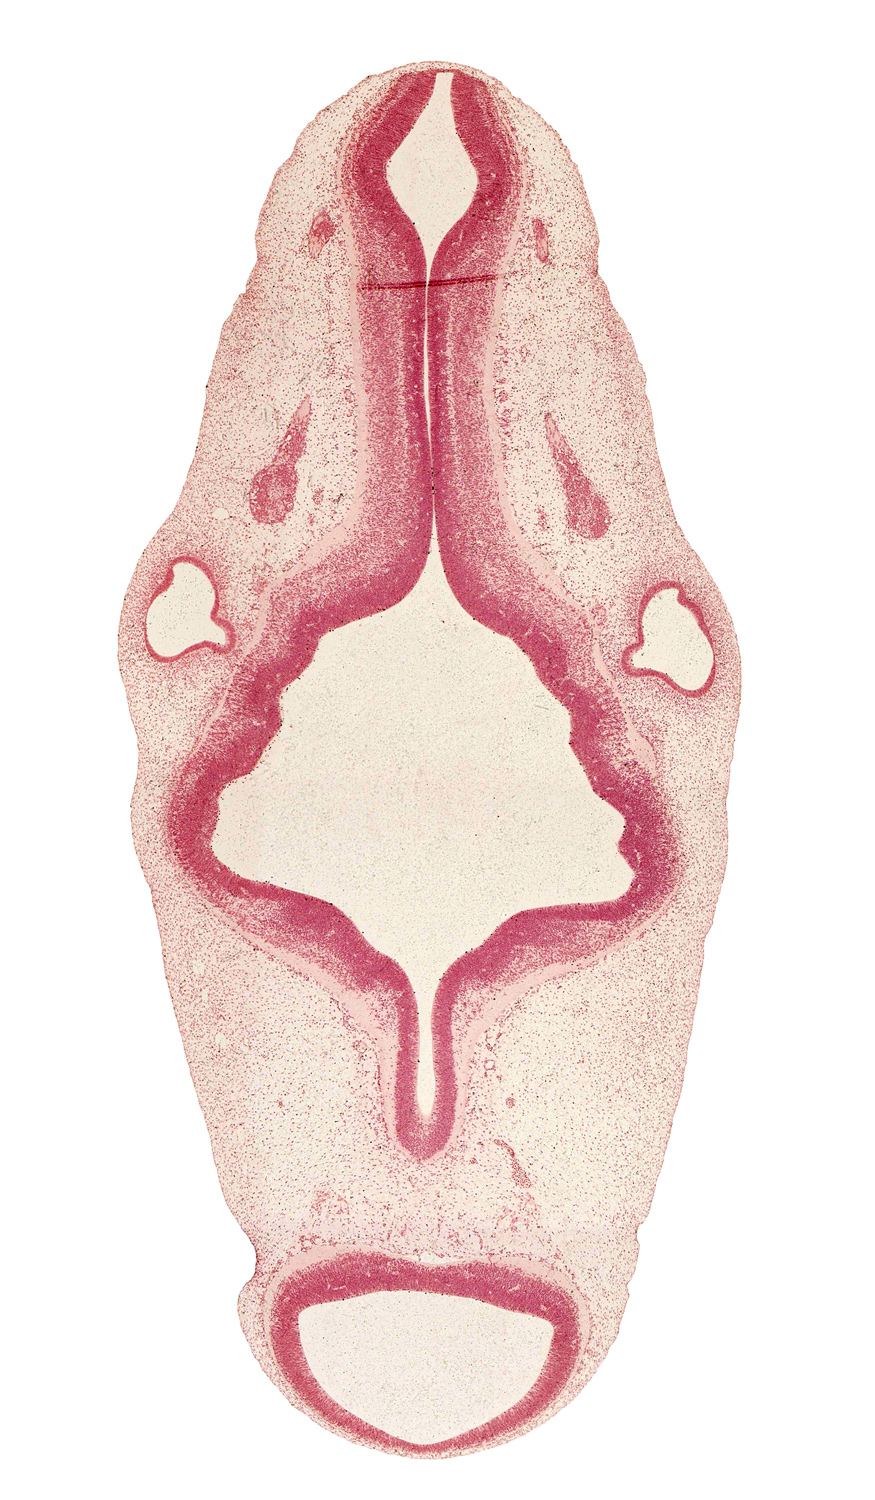 accessory nerve (CN XI), basal plate, central canal of myelencephalon, intermediate zone, marginal zone, median sulcus, mesencephalon (M1), oculomotor nerve (CN III), rhombomere 2, rhombomere 3, rhombomere 4, rhombomere 5, rhombomere 6, root of glossopharyngeal nerve (CN IX), sulcus limitans, superior ganglion of vagus nerve (CN X), trochlear nerve (CN IV), ventricular zone